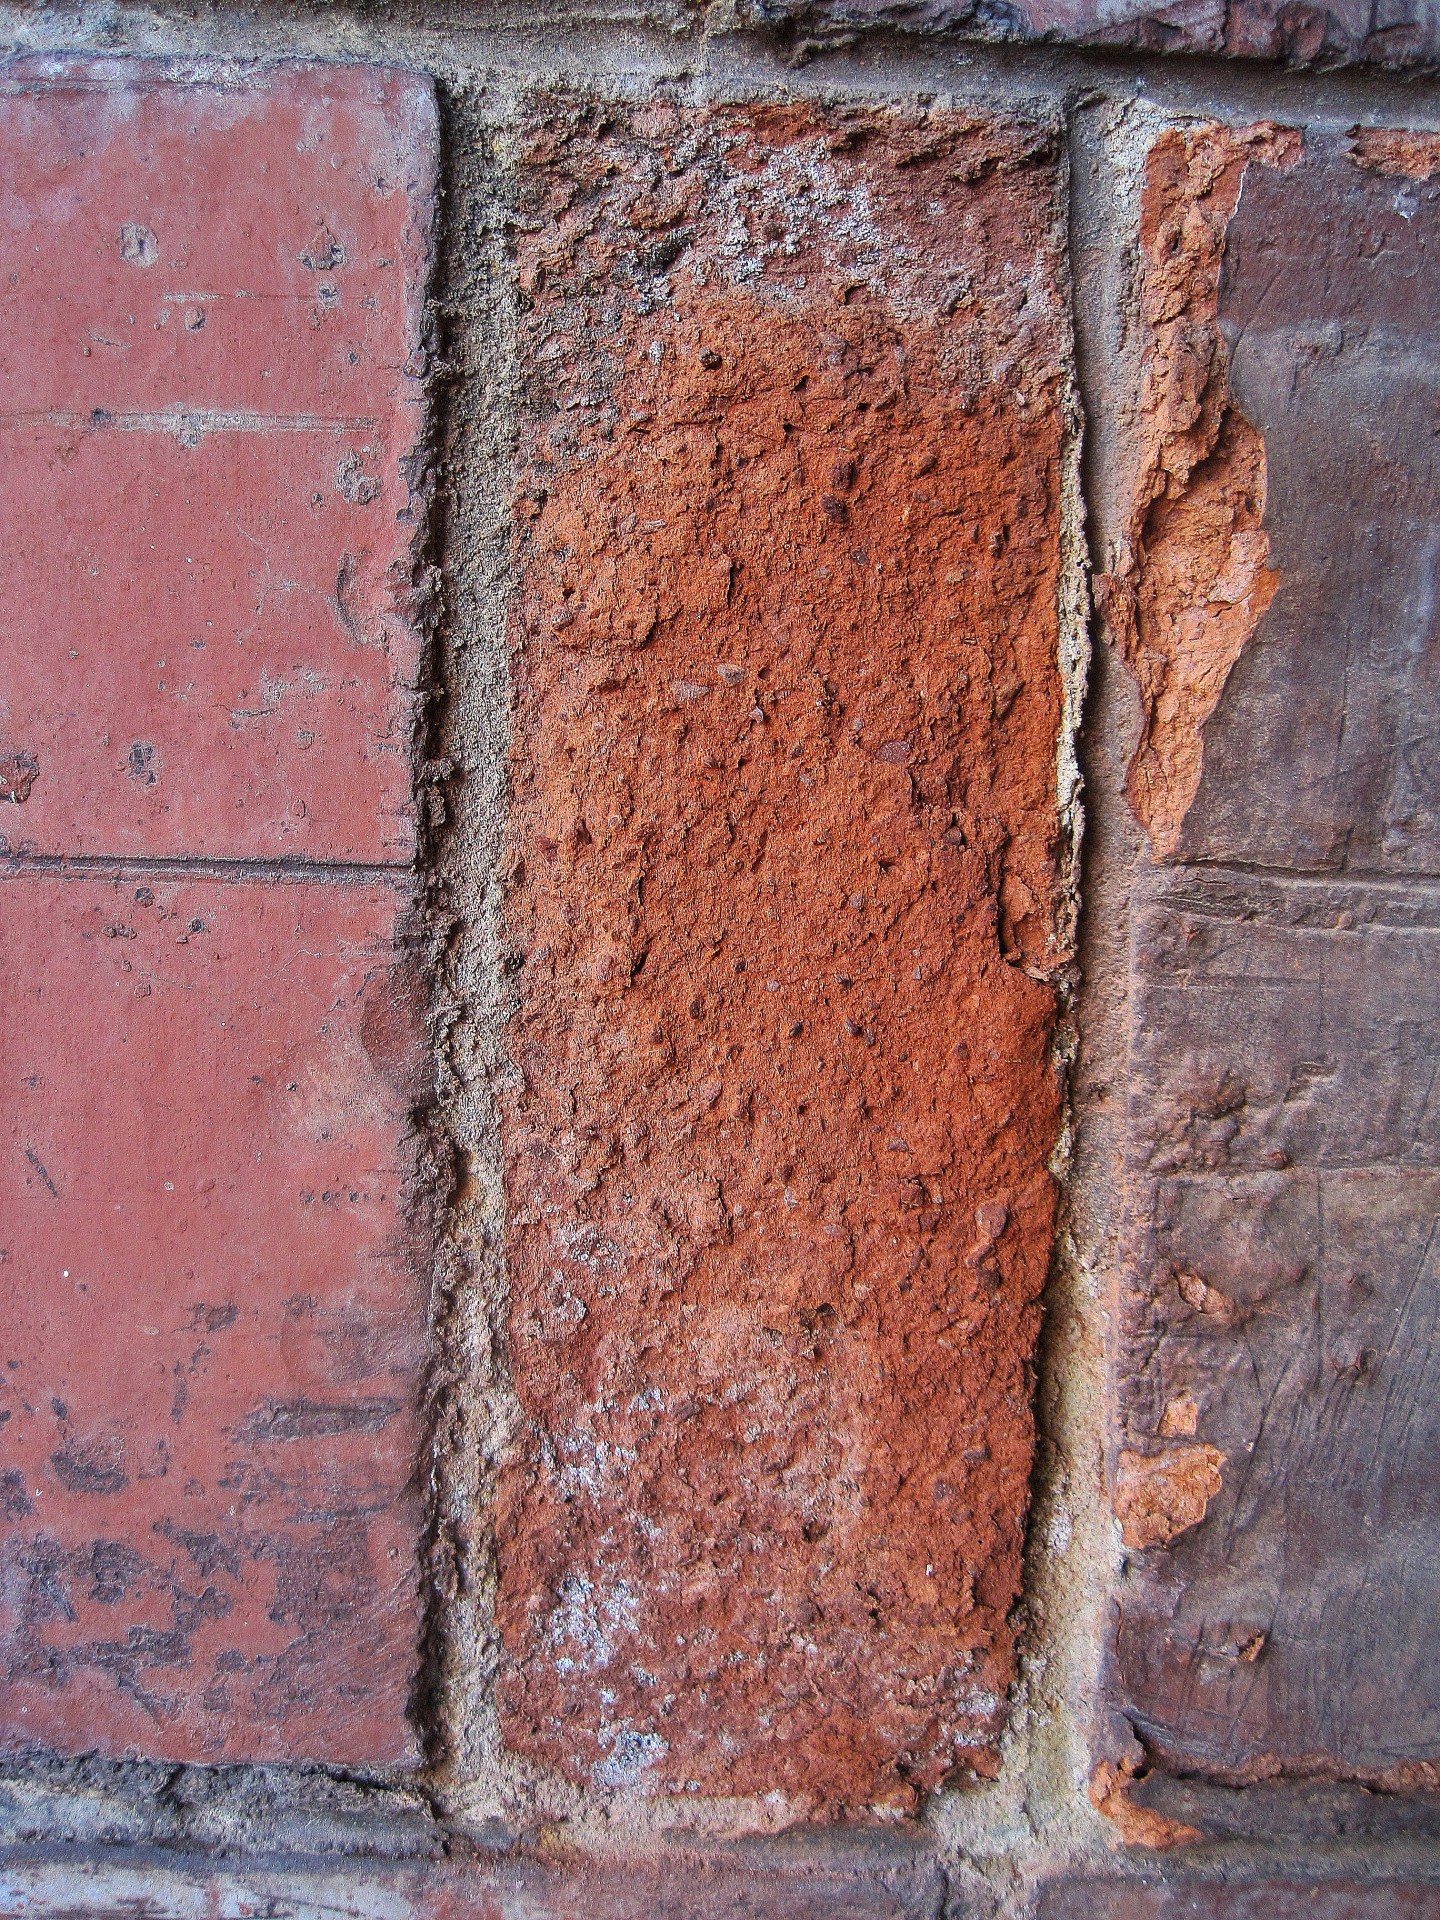 Roughened Brick Surface